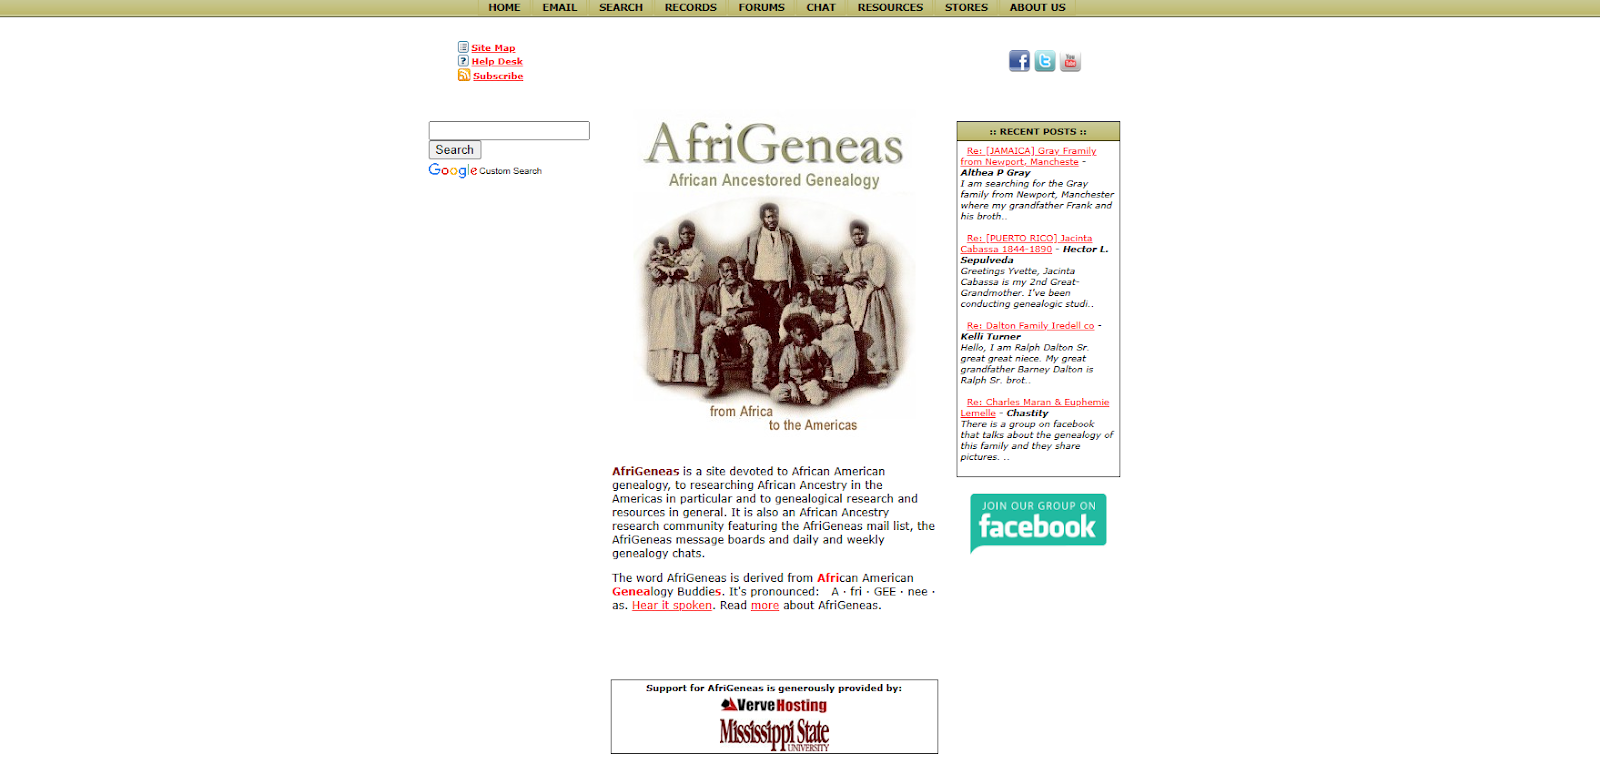 AfriGeneas.org’s landing page